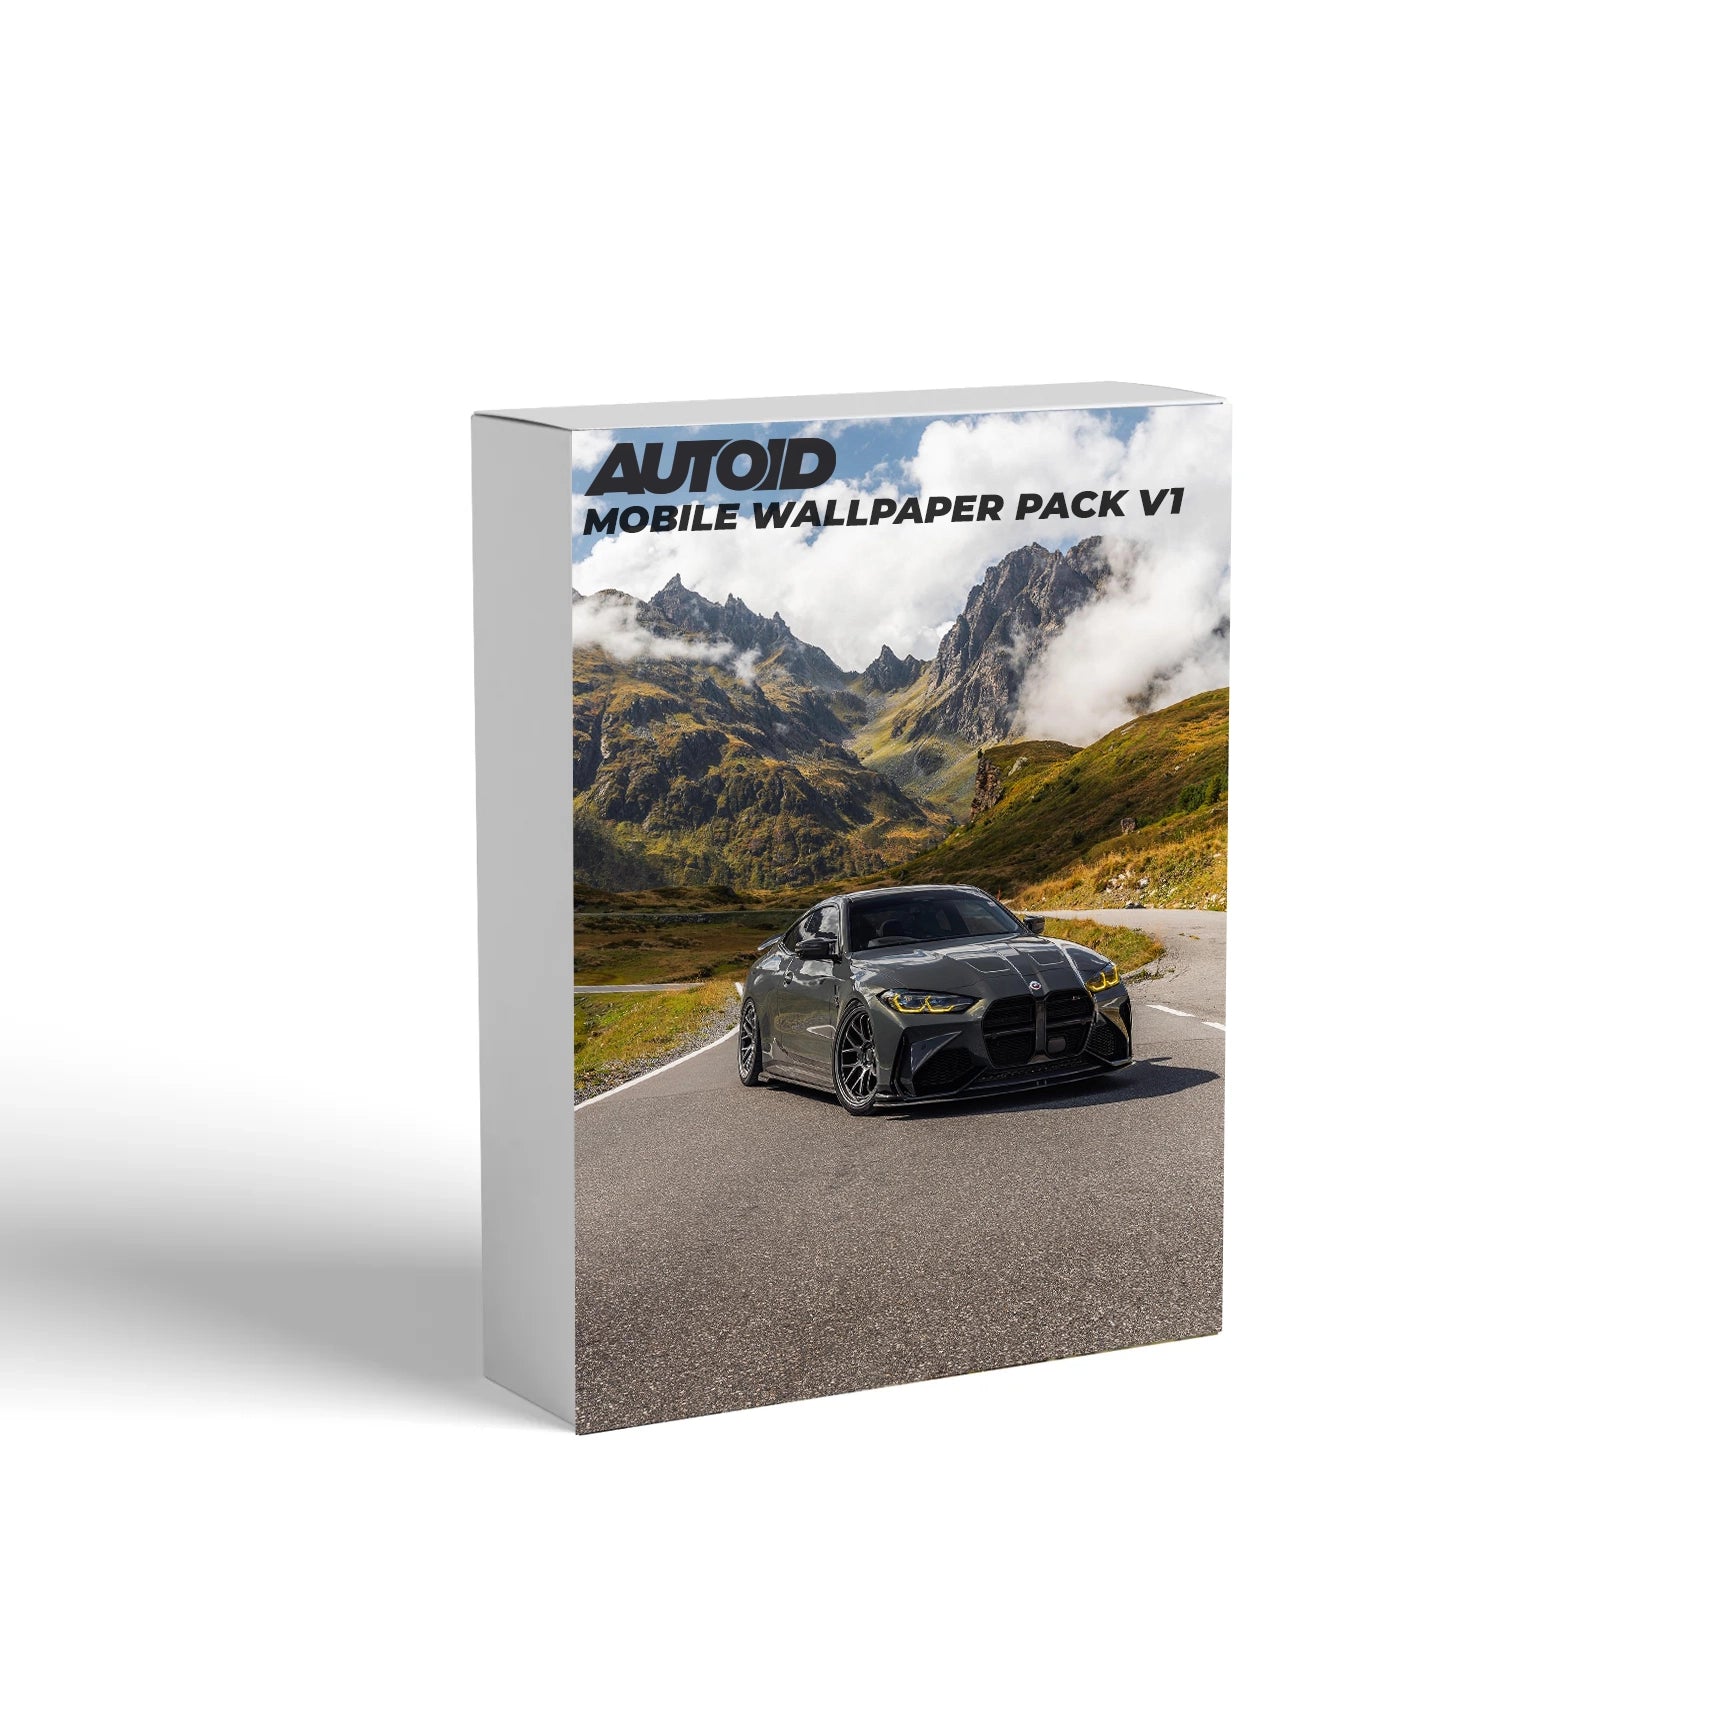 AUTOID Mobile Wallpaper Pack V1 (iPhone & Android), Key Straps & Accessories, AUTOID - AUTOID | Premium Automotive Accessories